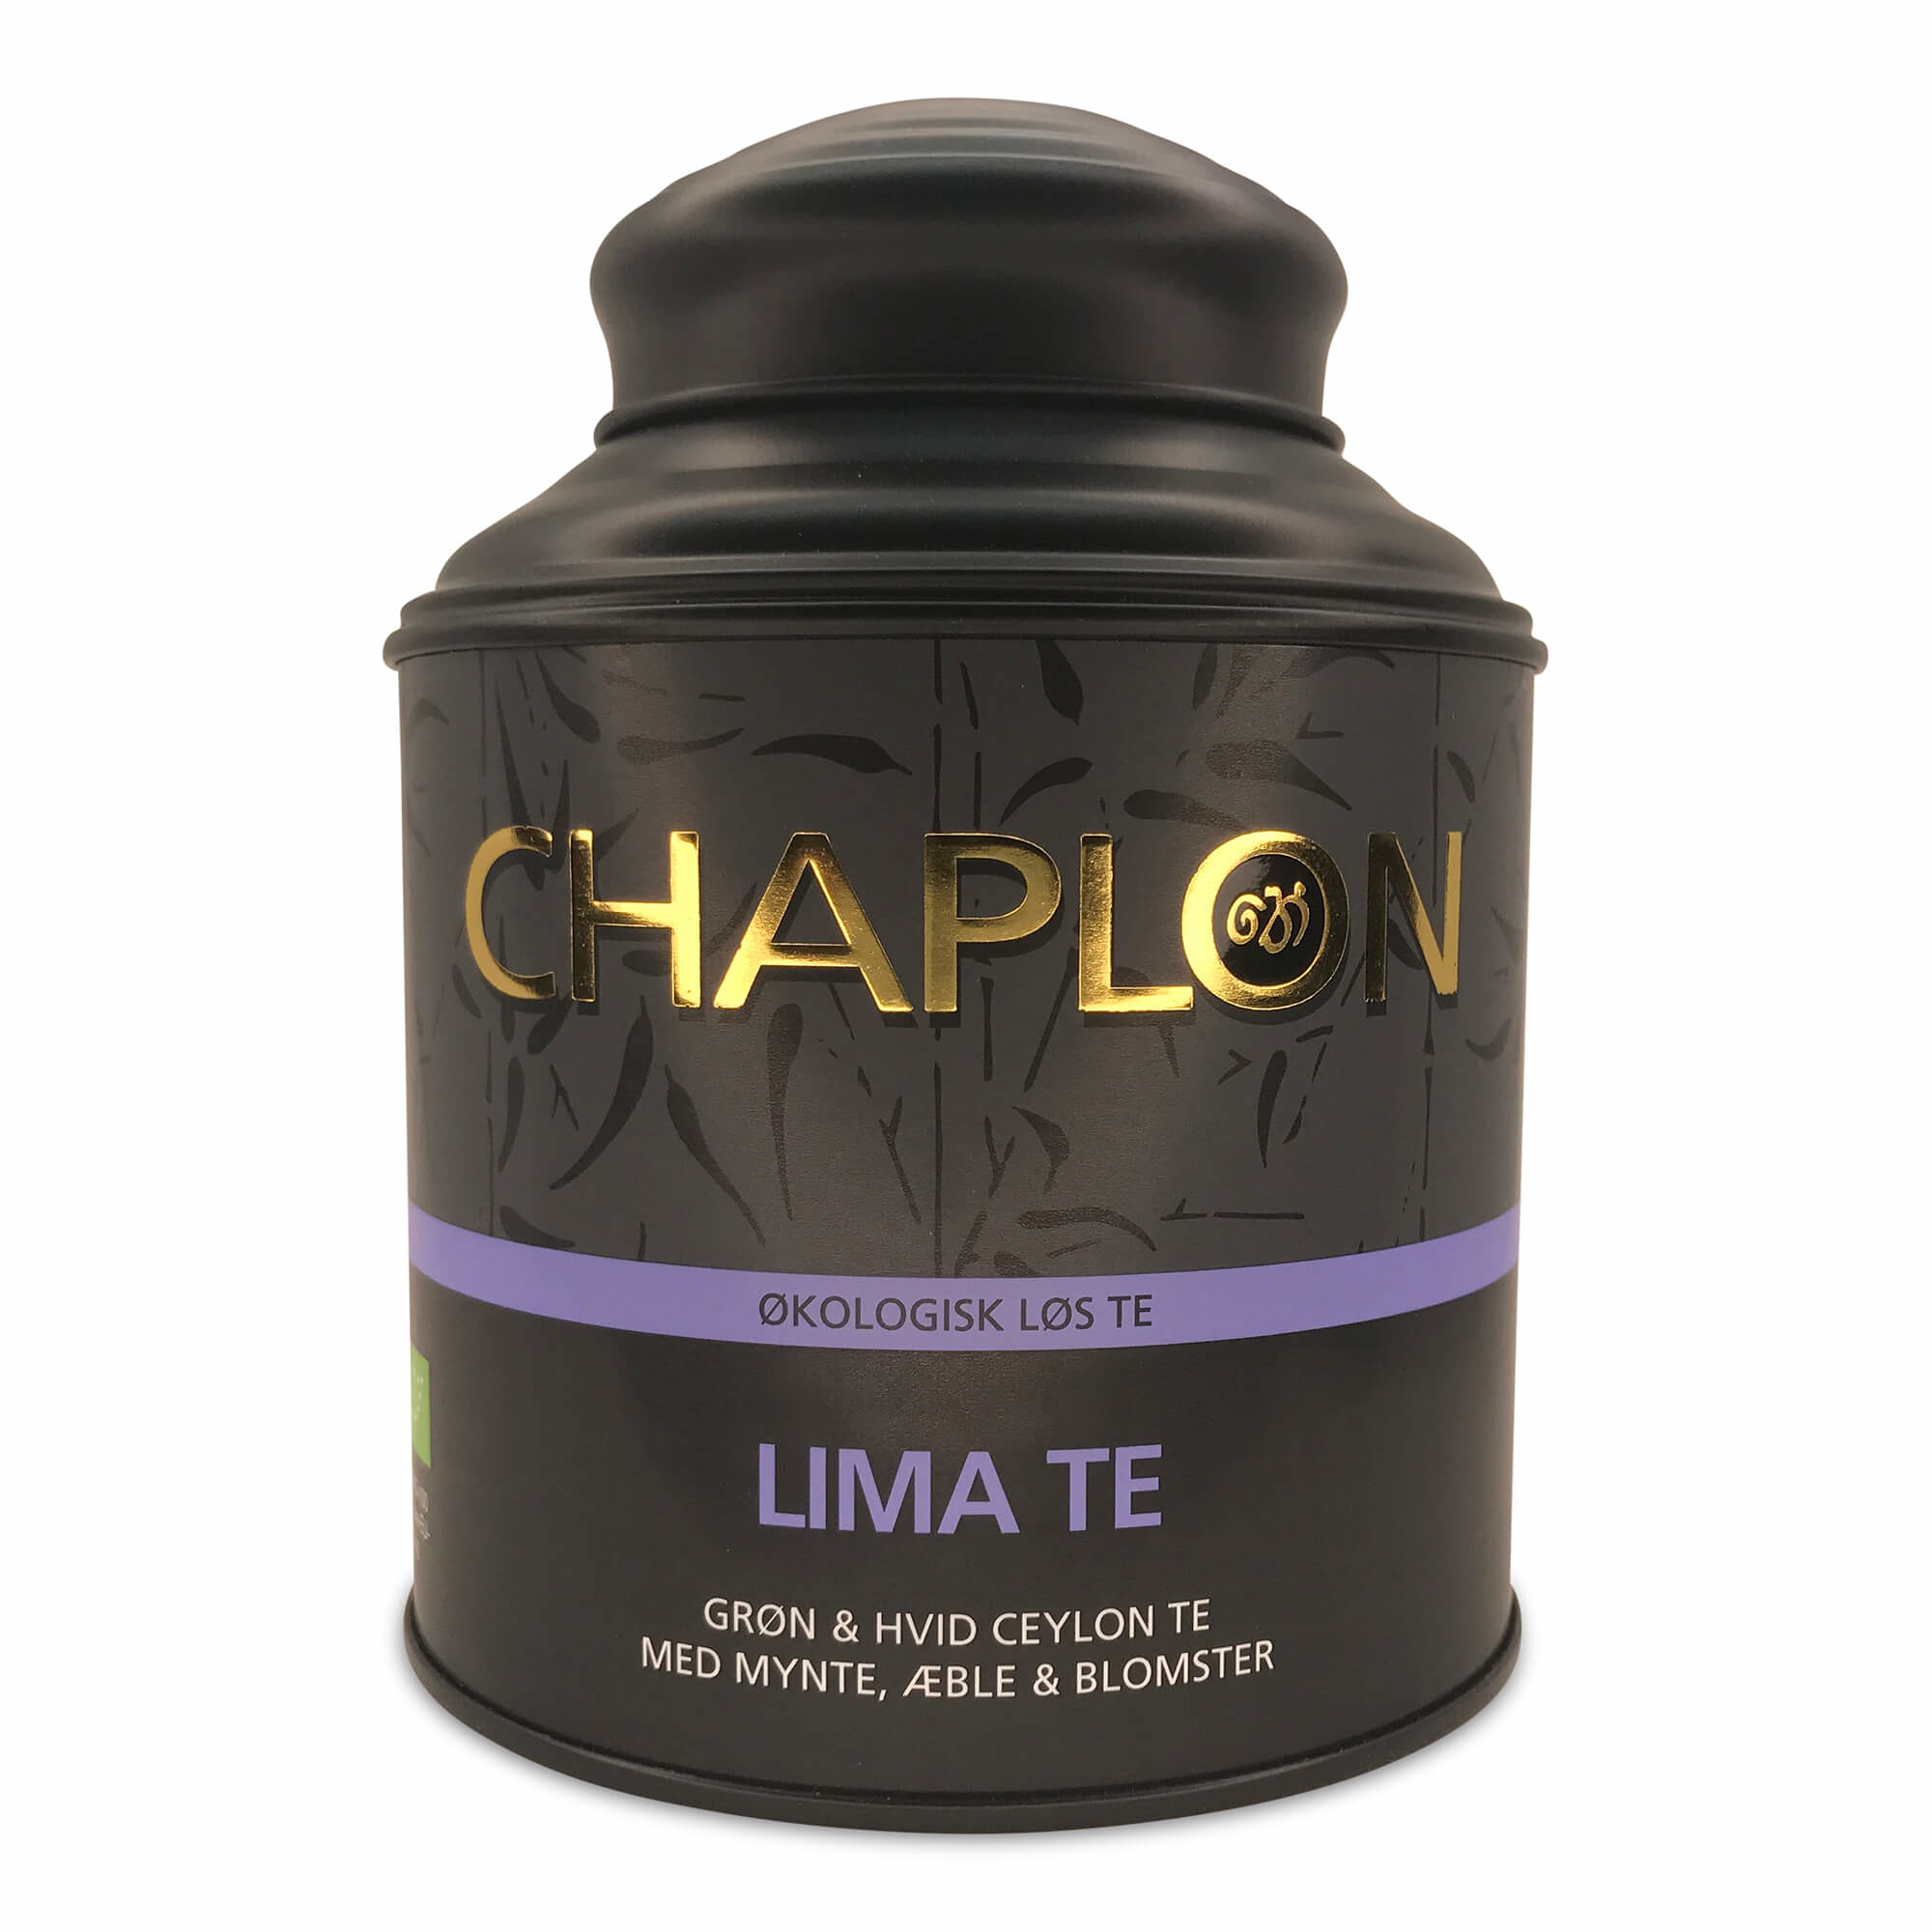 Chaplon Lima Te - 160 gram dåse thumbnail